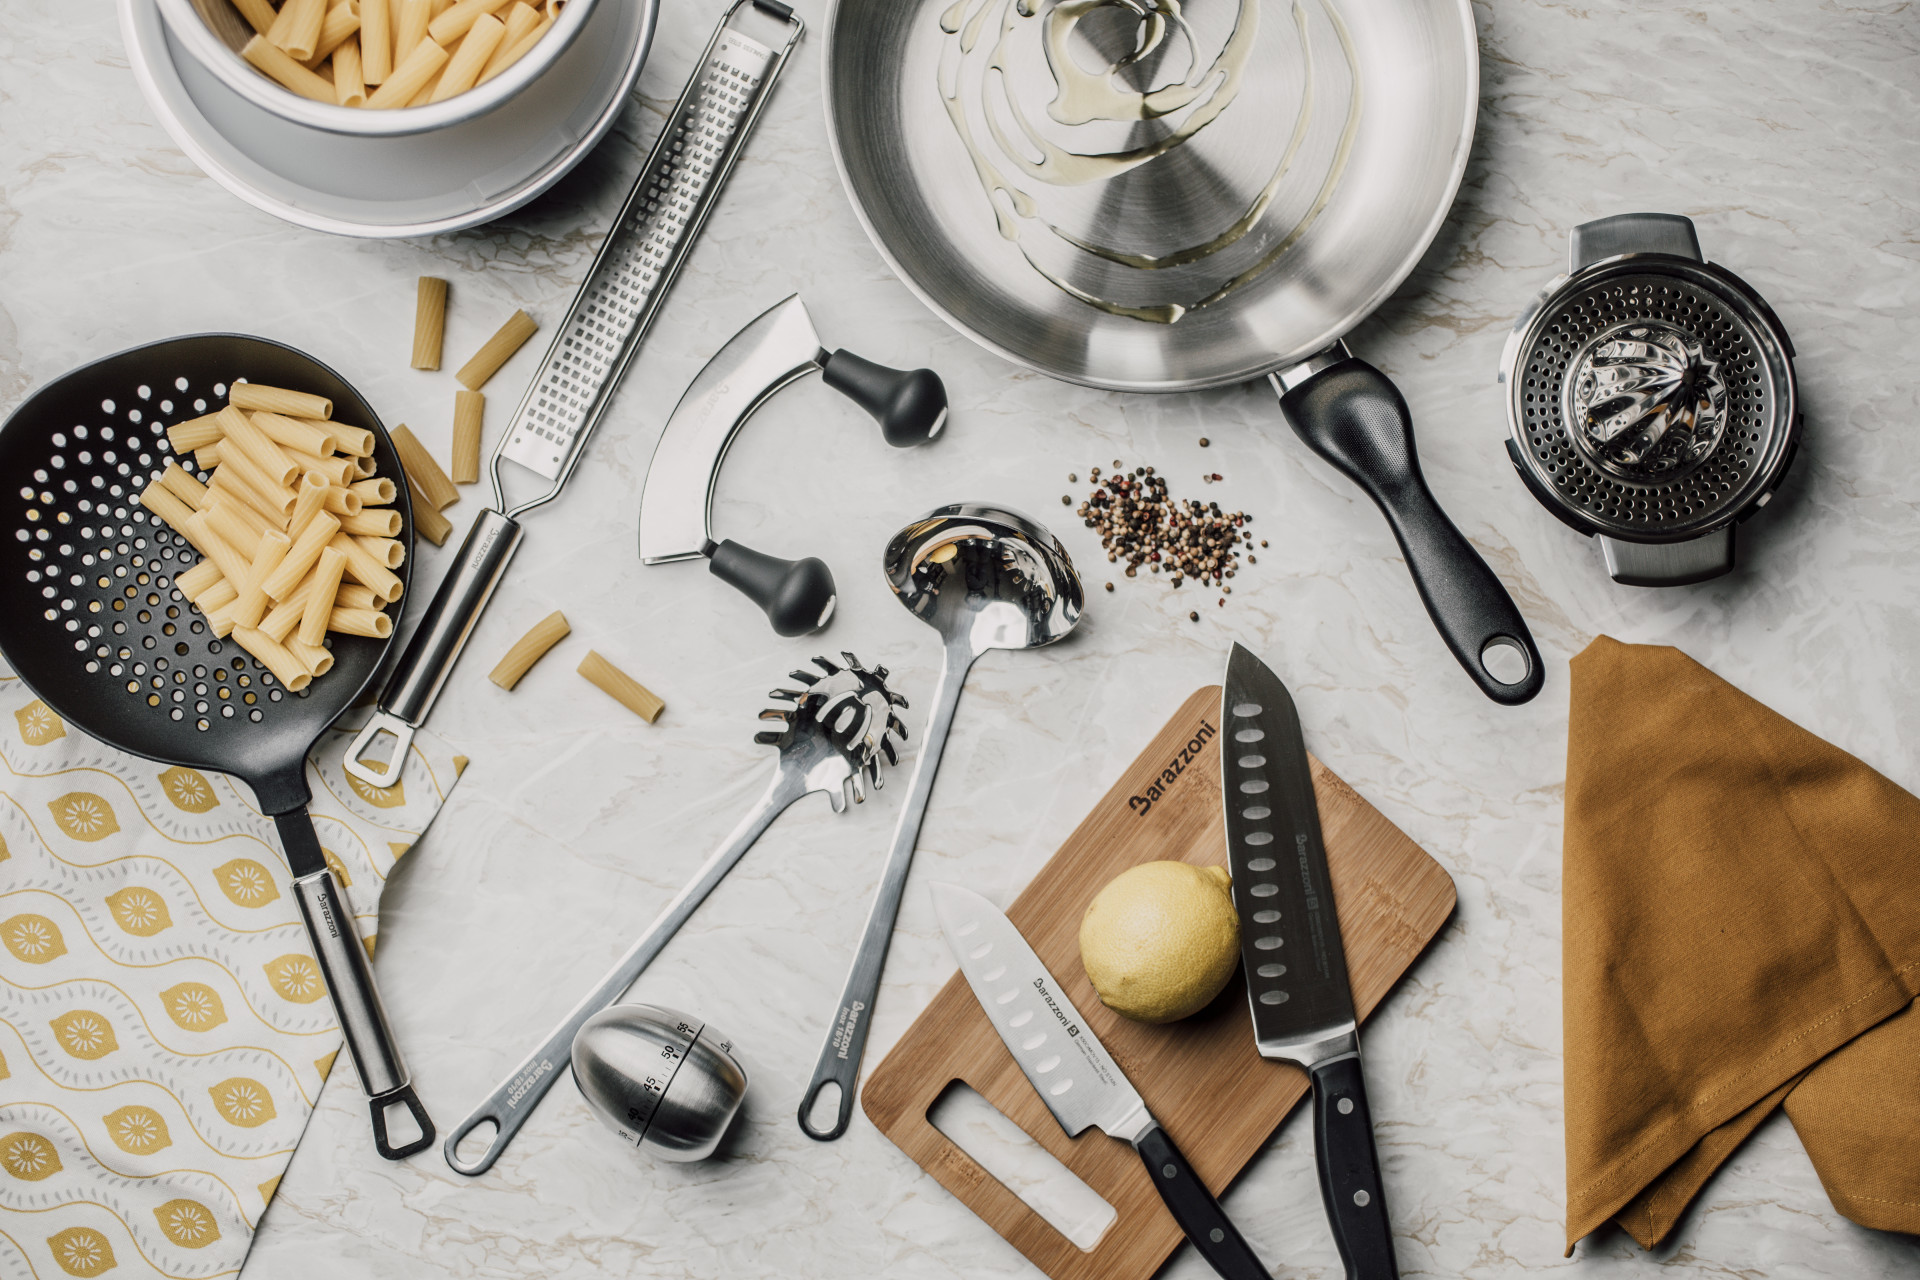 Pentole Made In Italy e utensili da cucina - Shop online